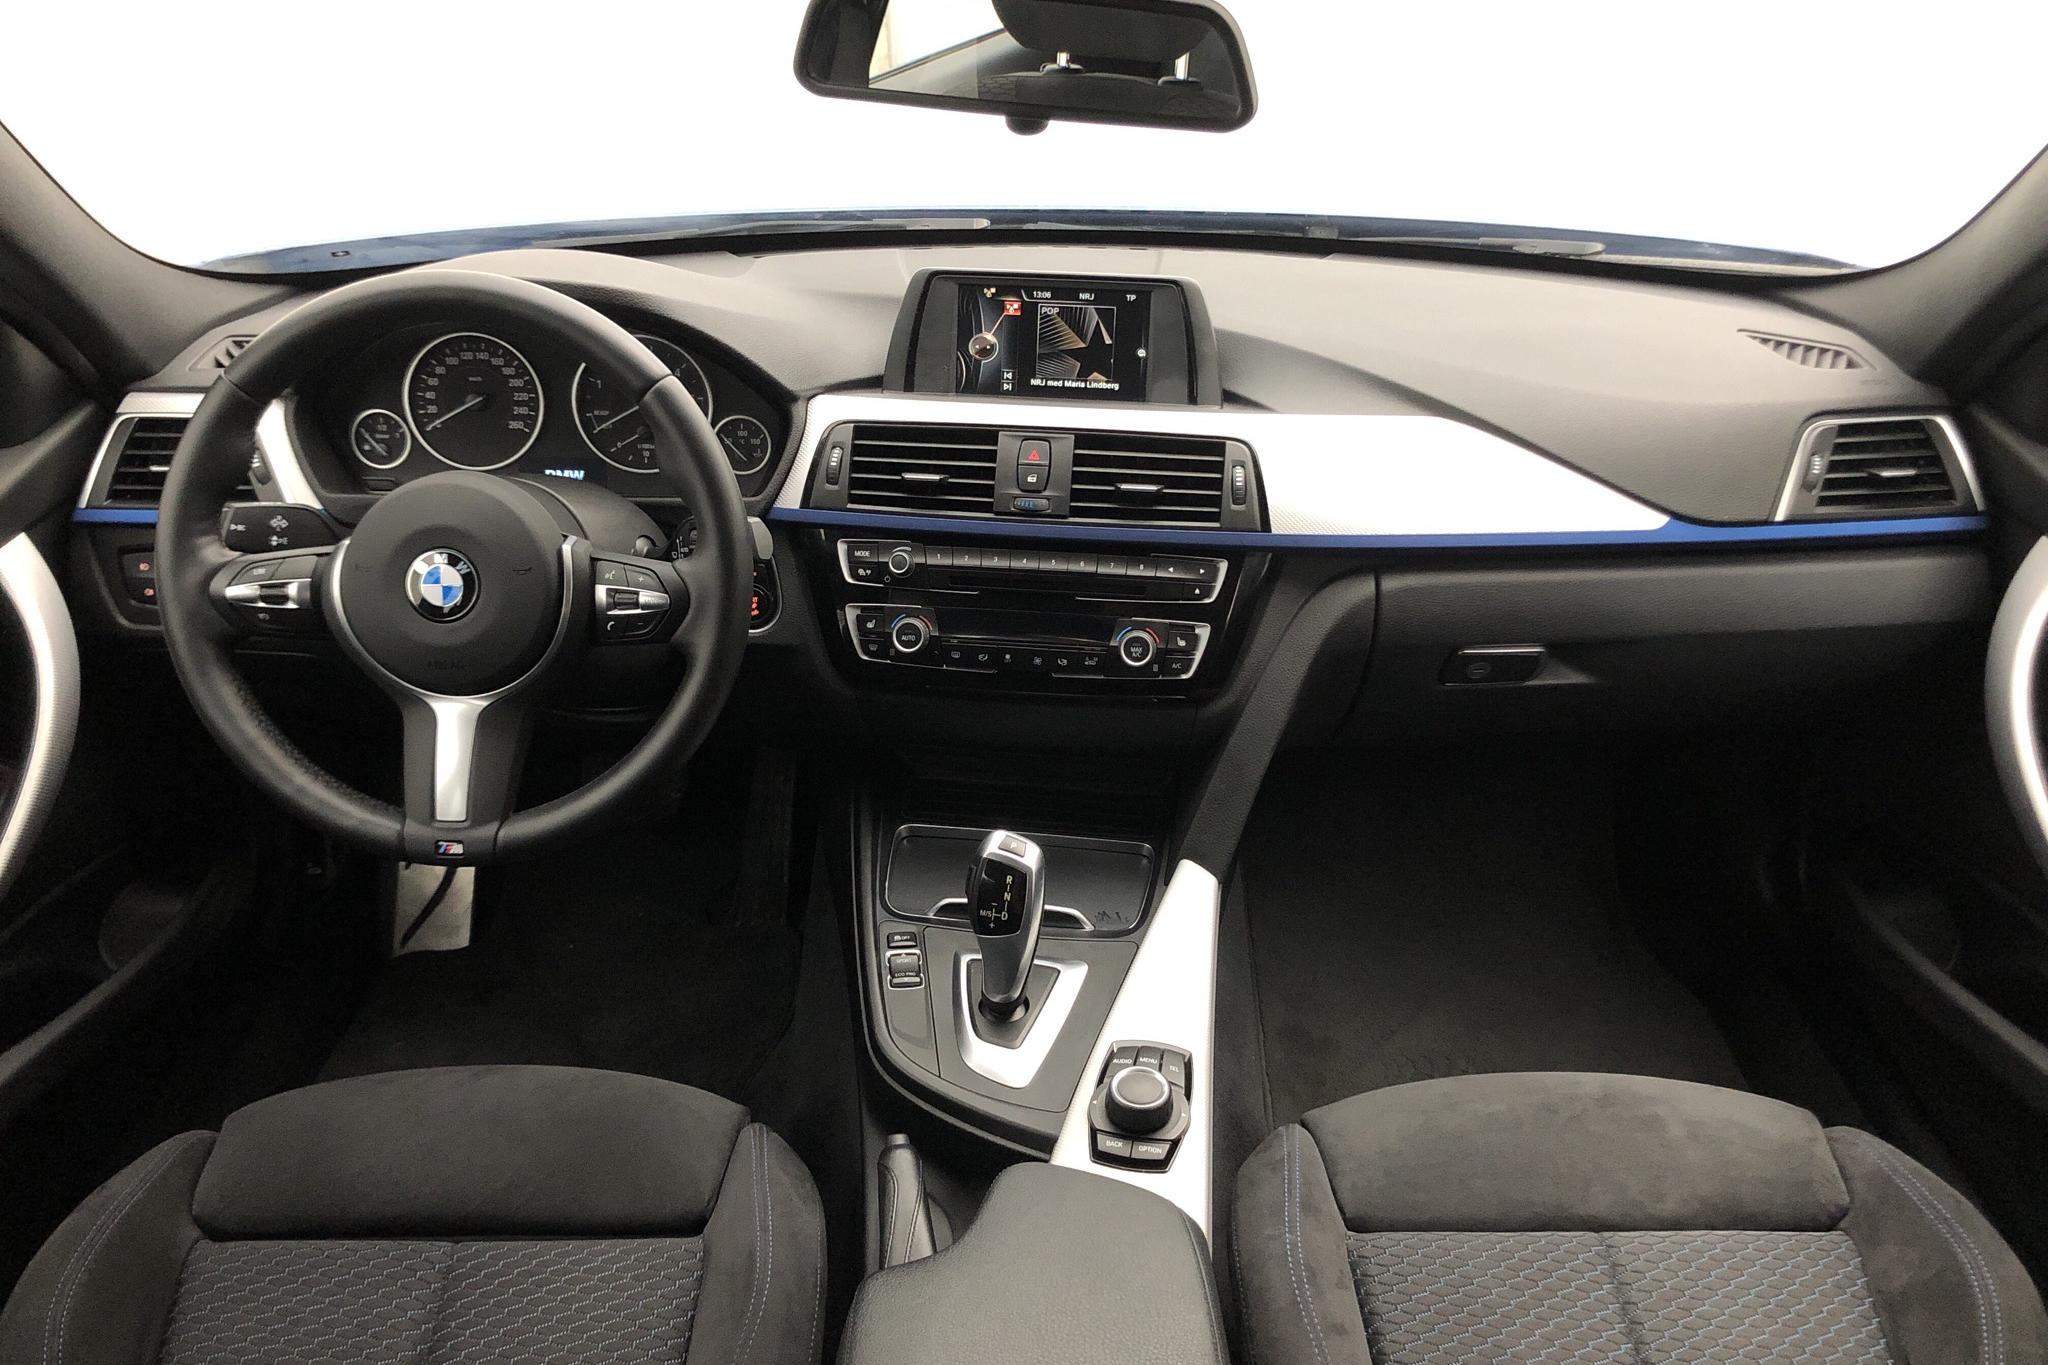 BMW 320d xDrive Touring, F31 (190hk) - 115 660 km - Automatic - blue - 2017